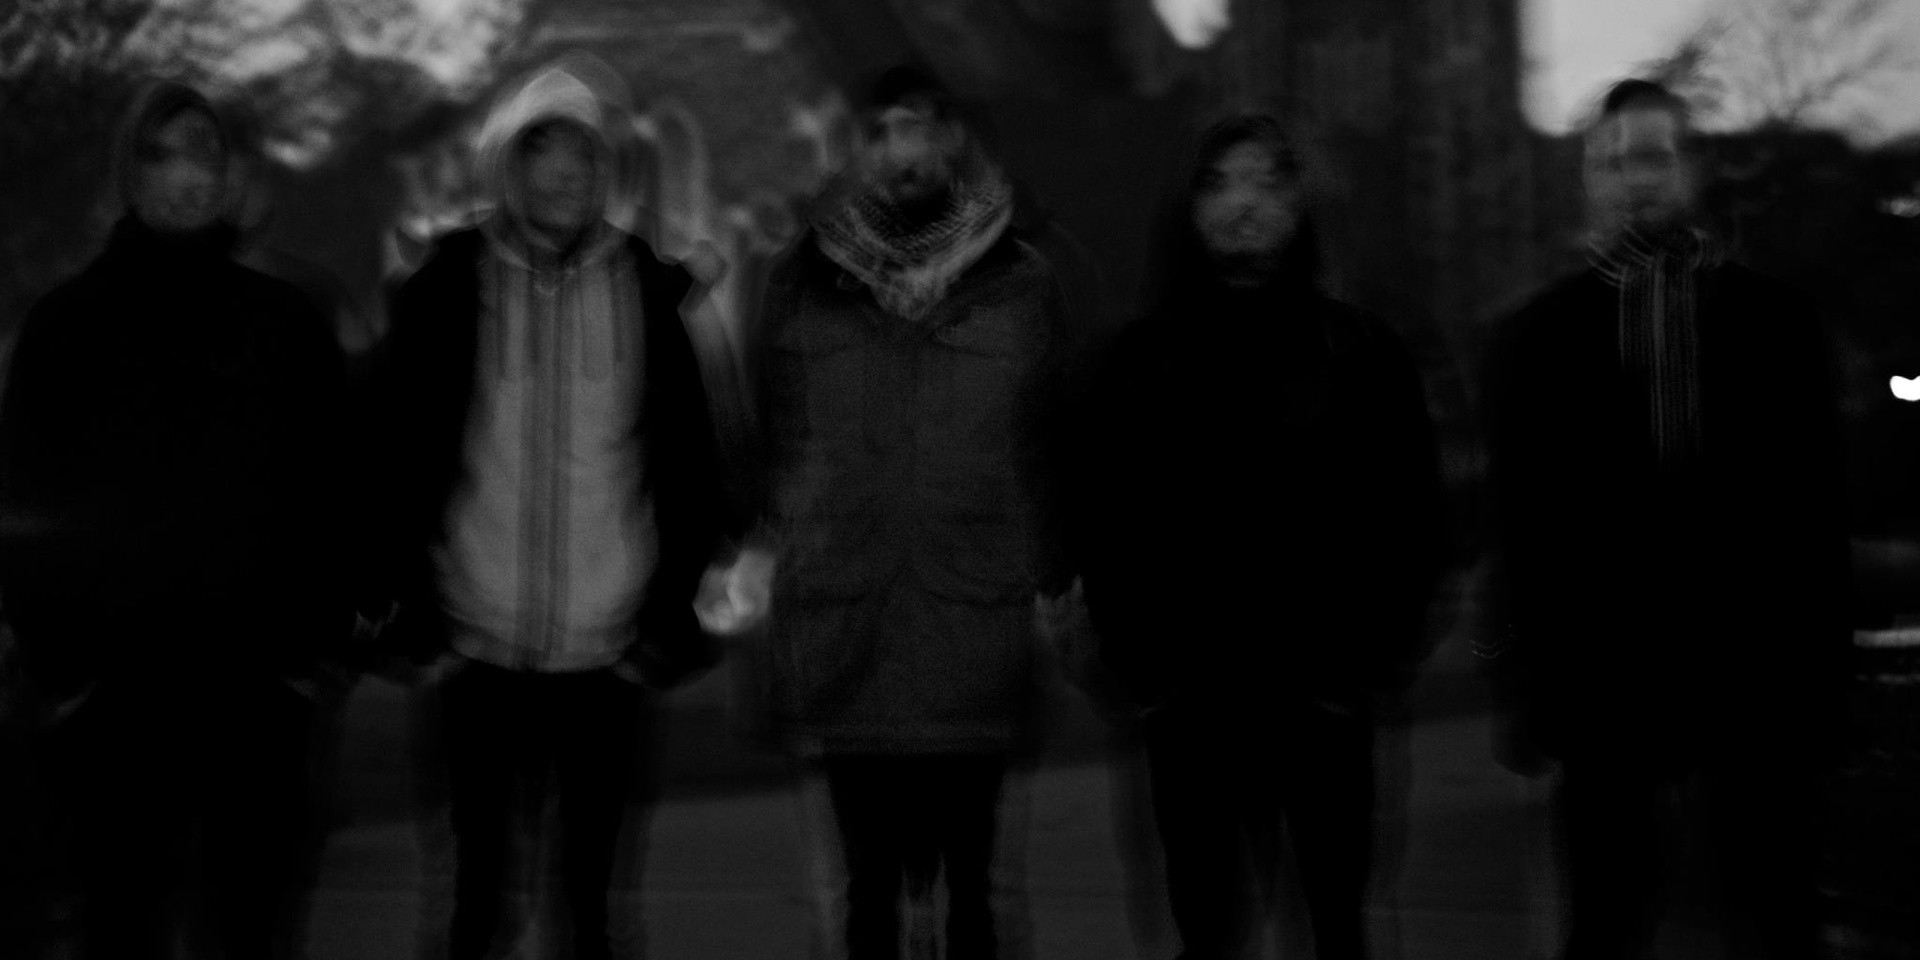 Danish dark hardcore band Hexis announce Philippine dates of Asian tour